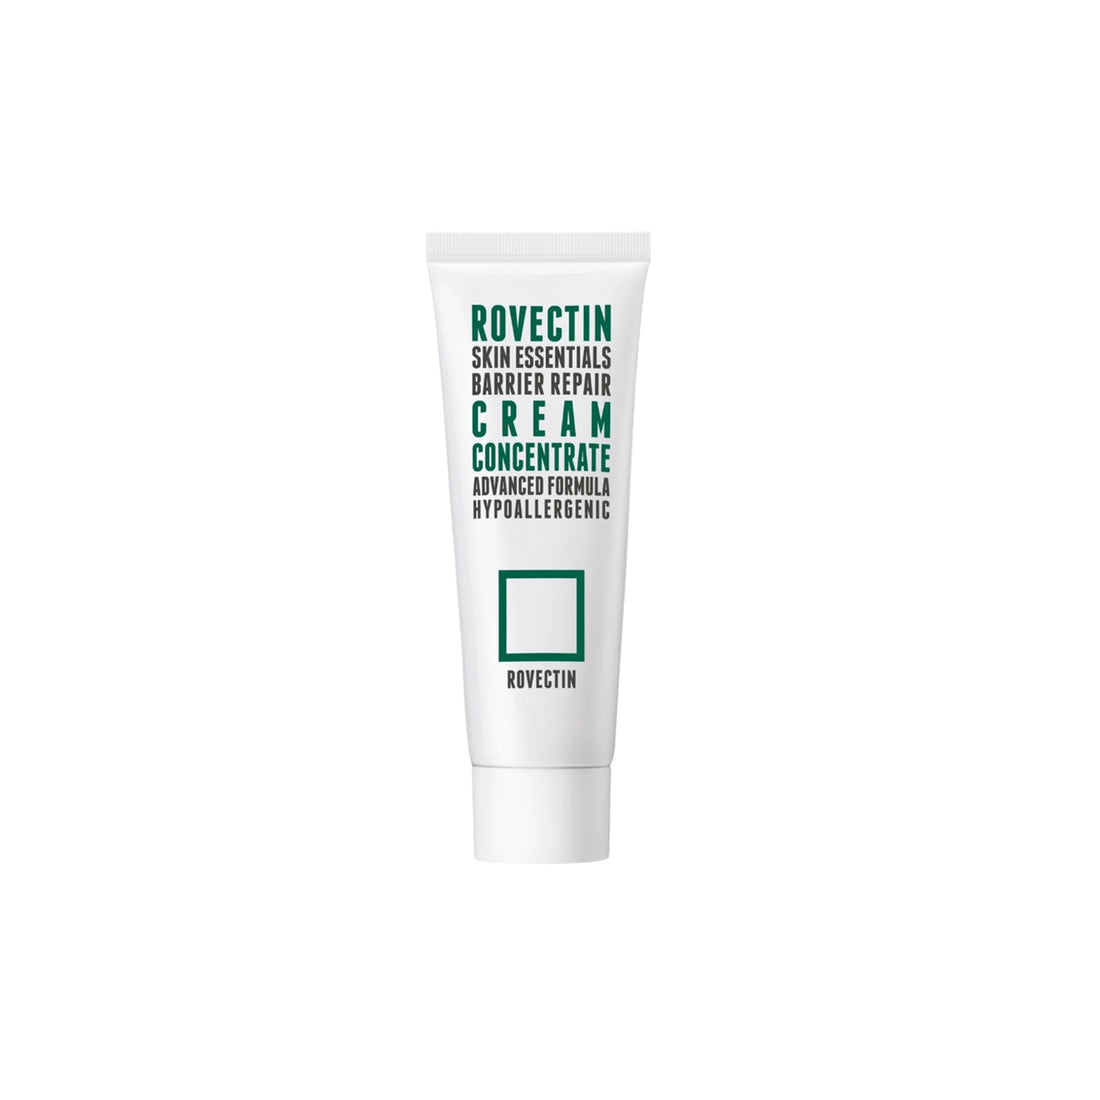 Skin Essentials Barrier Repair Cream Concentrate